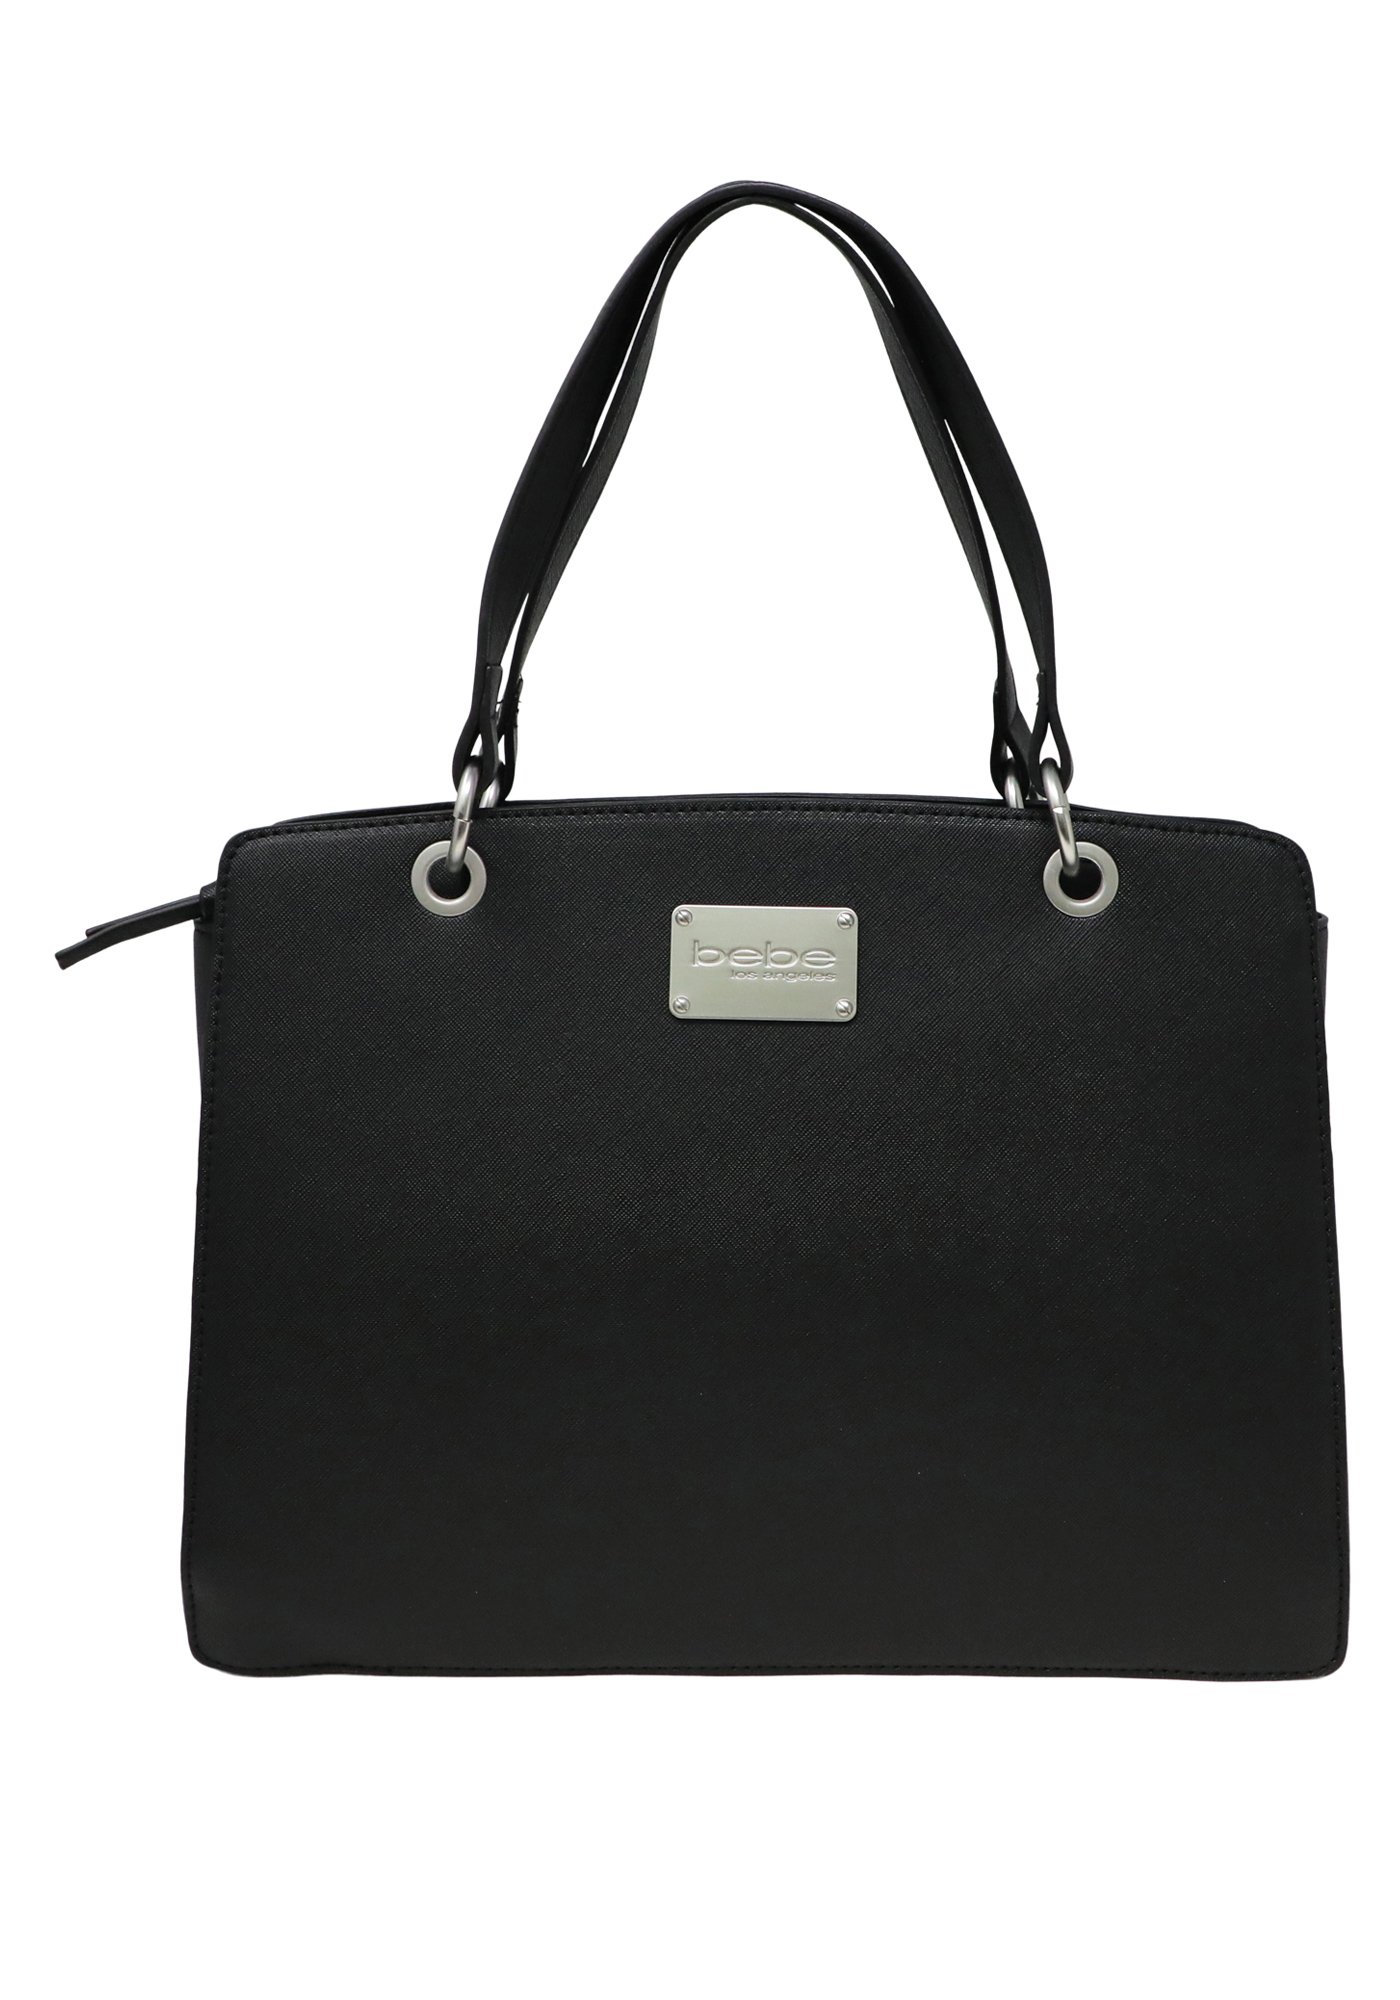 Bebe Women's Alice Shopper Bag, Size OS in Black Polyurethane